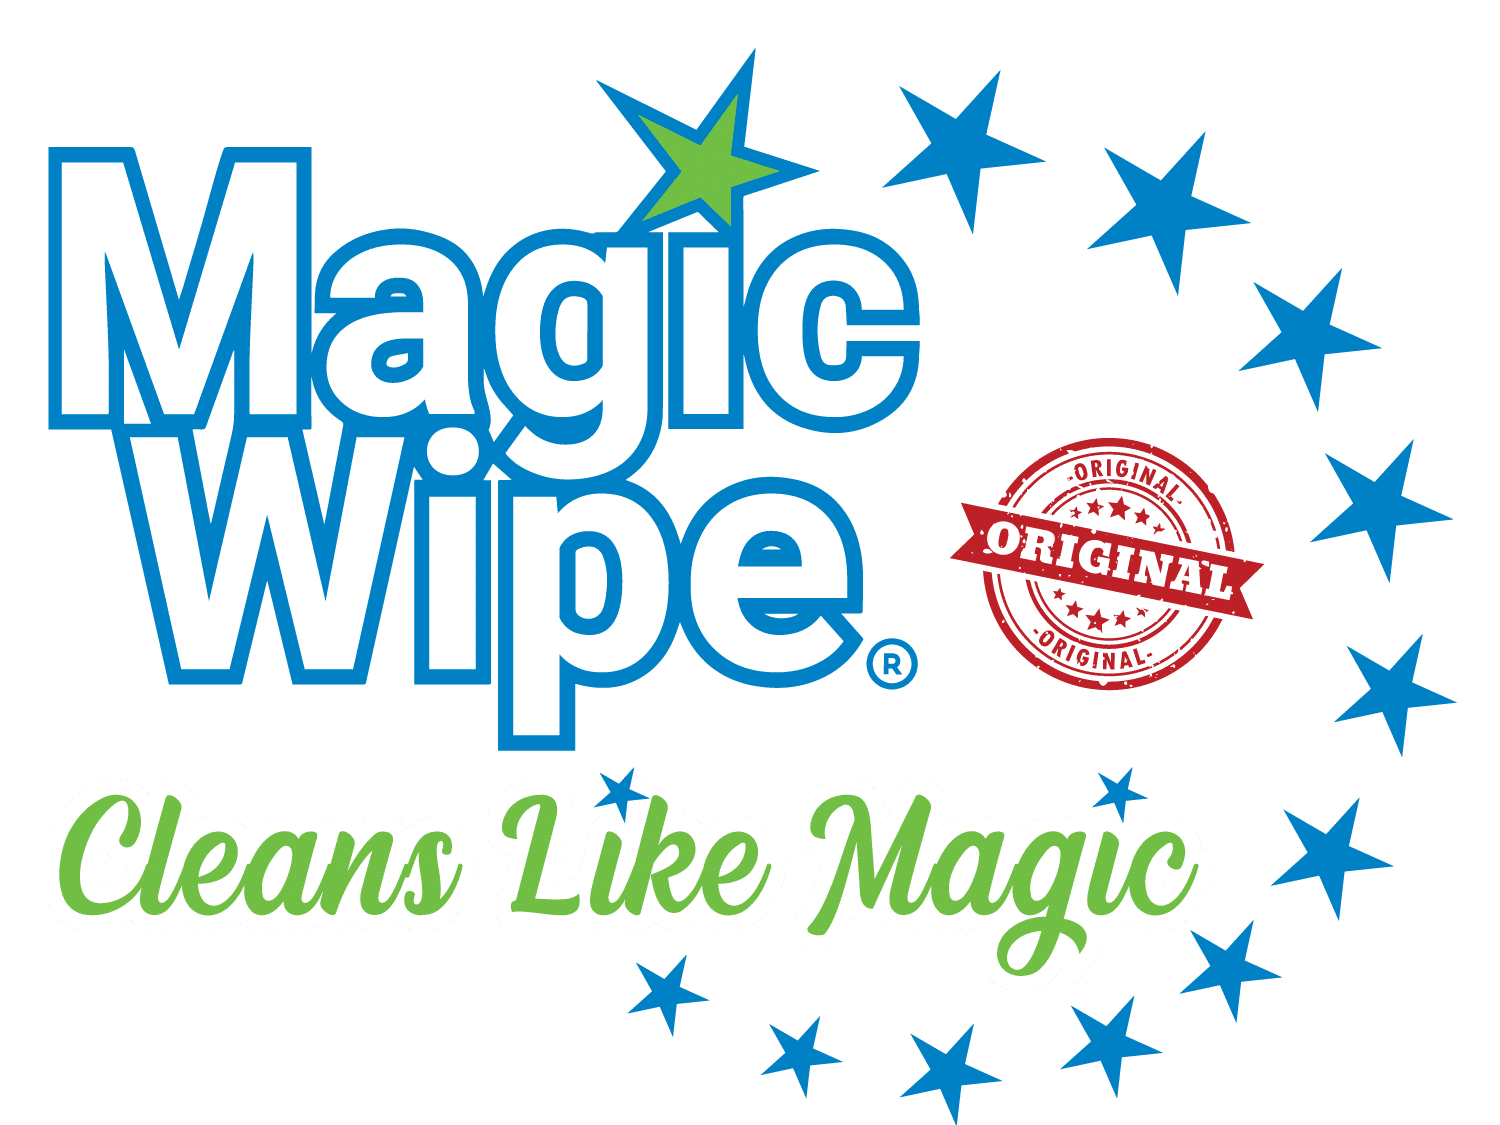 Magic wipe logo